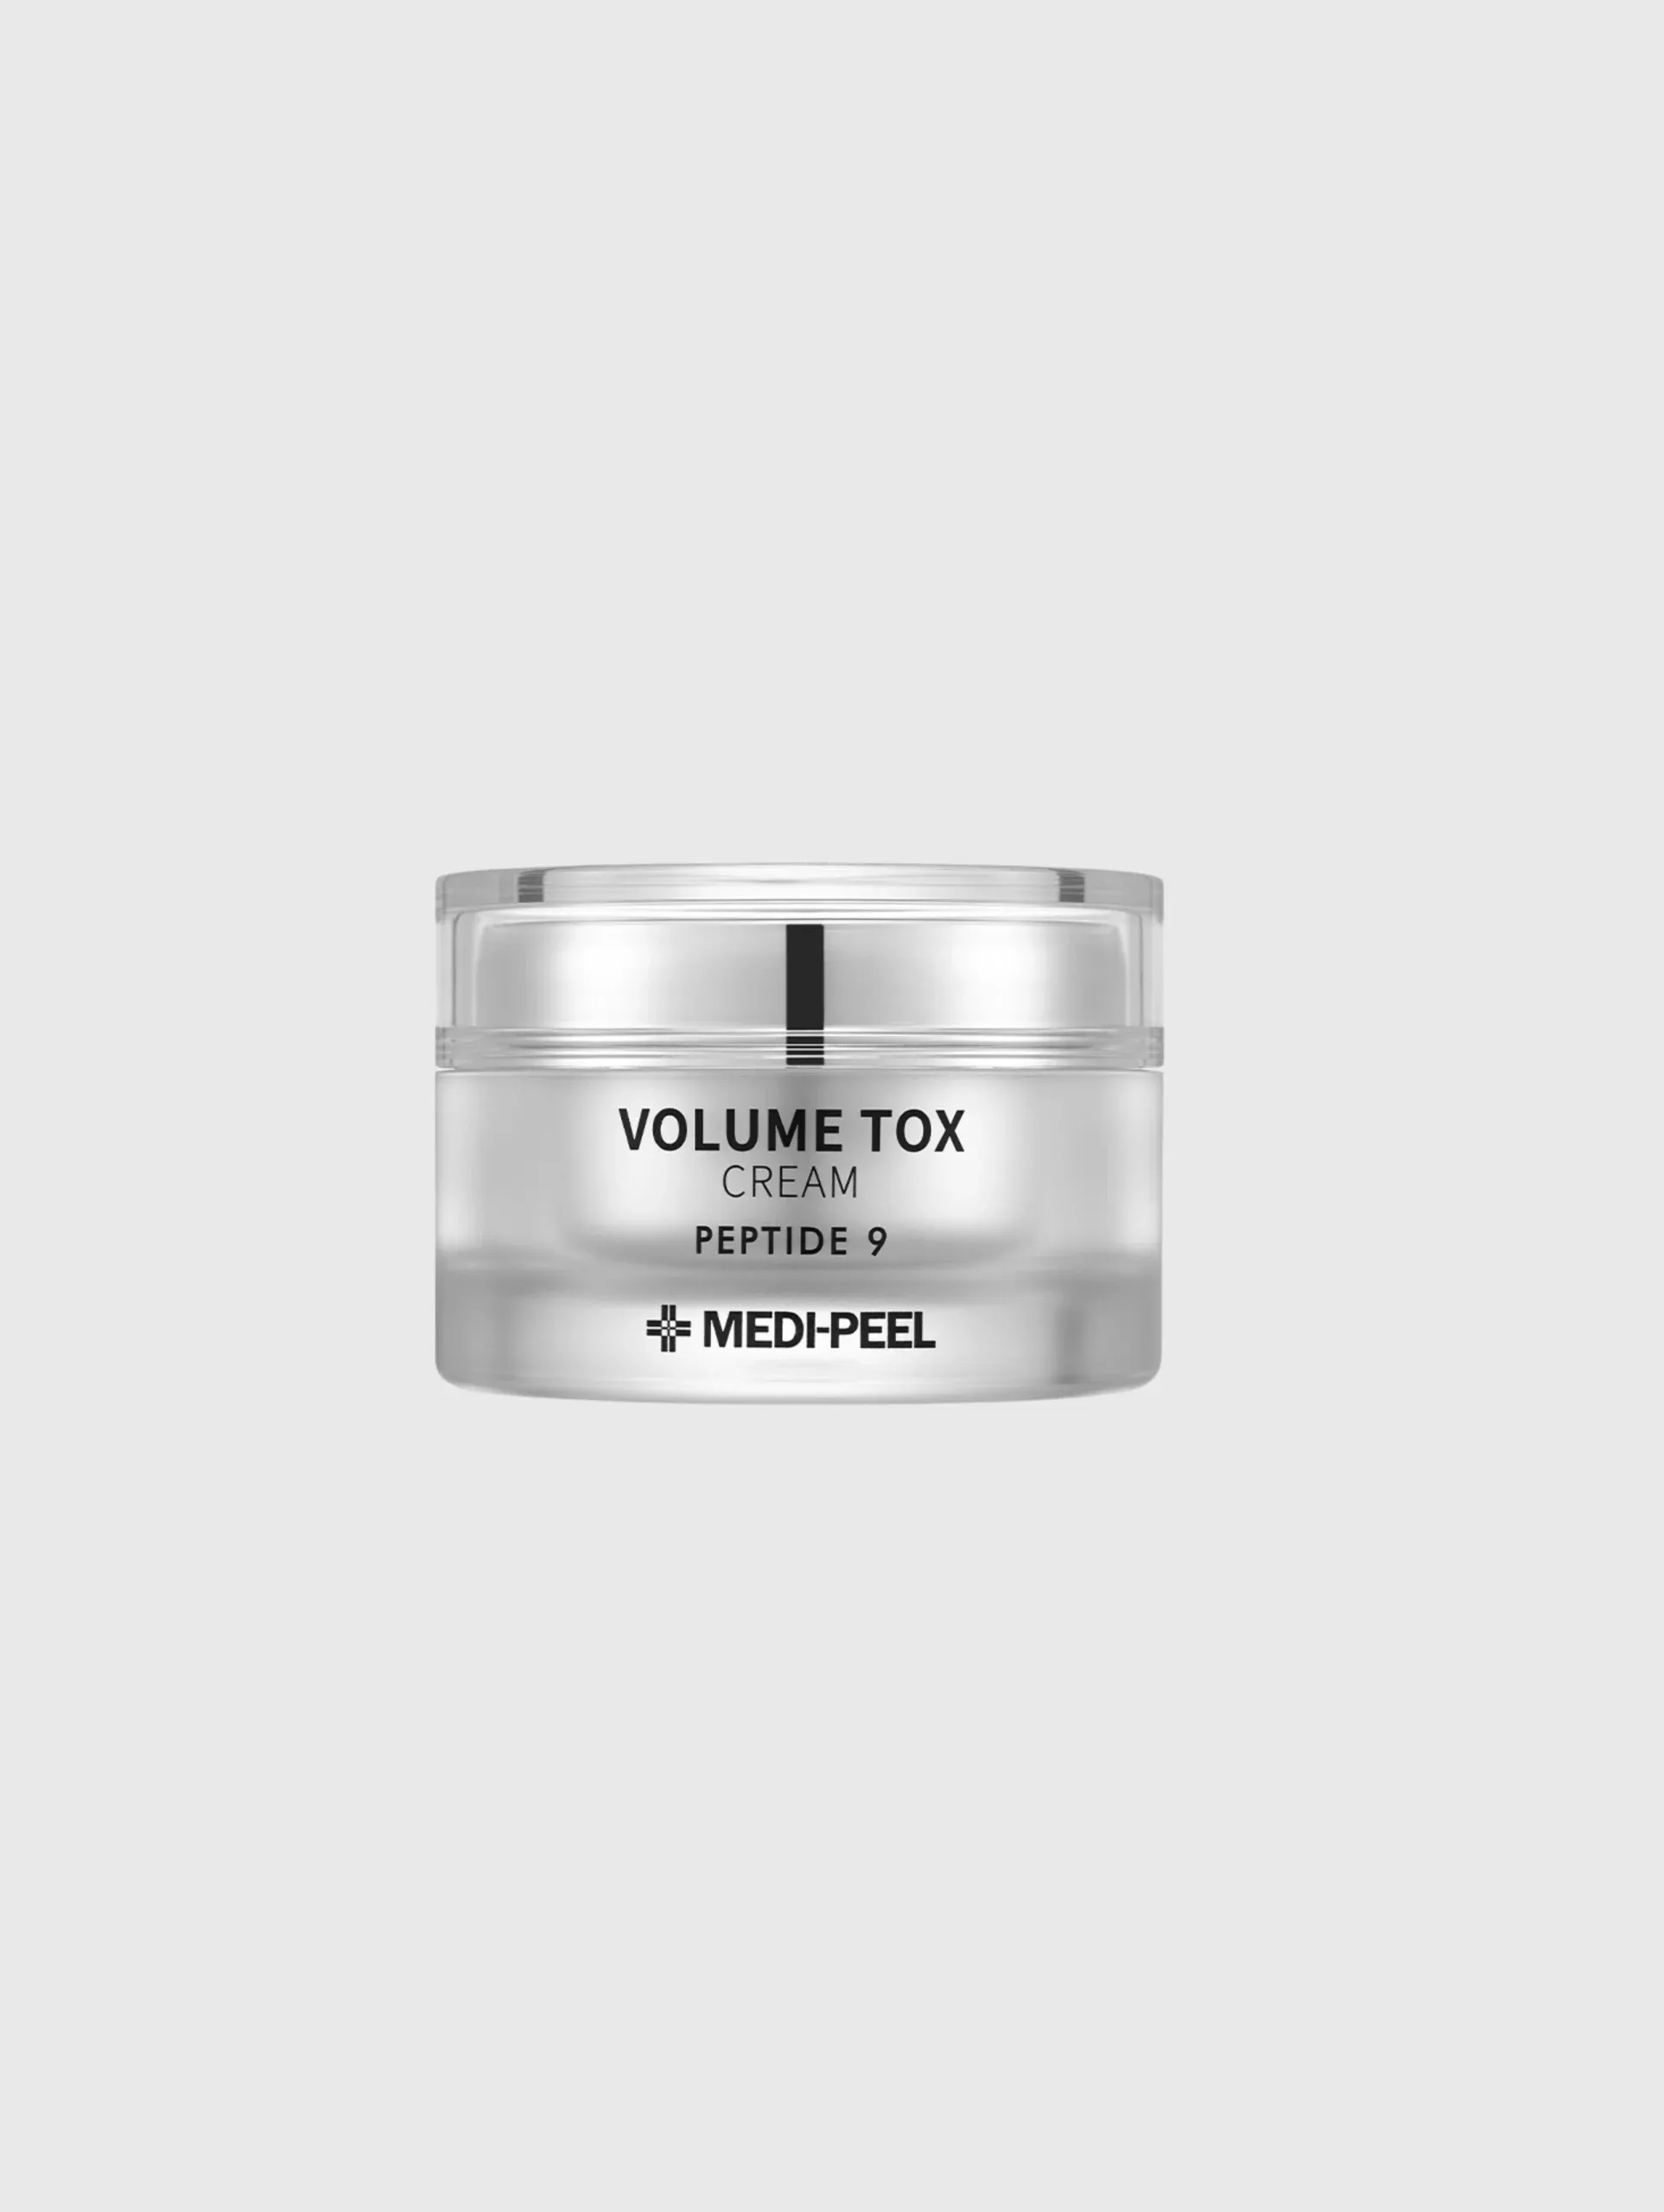 Medi-Peel – Peptide 9 Volume Tox Cream 50ml.